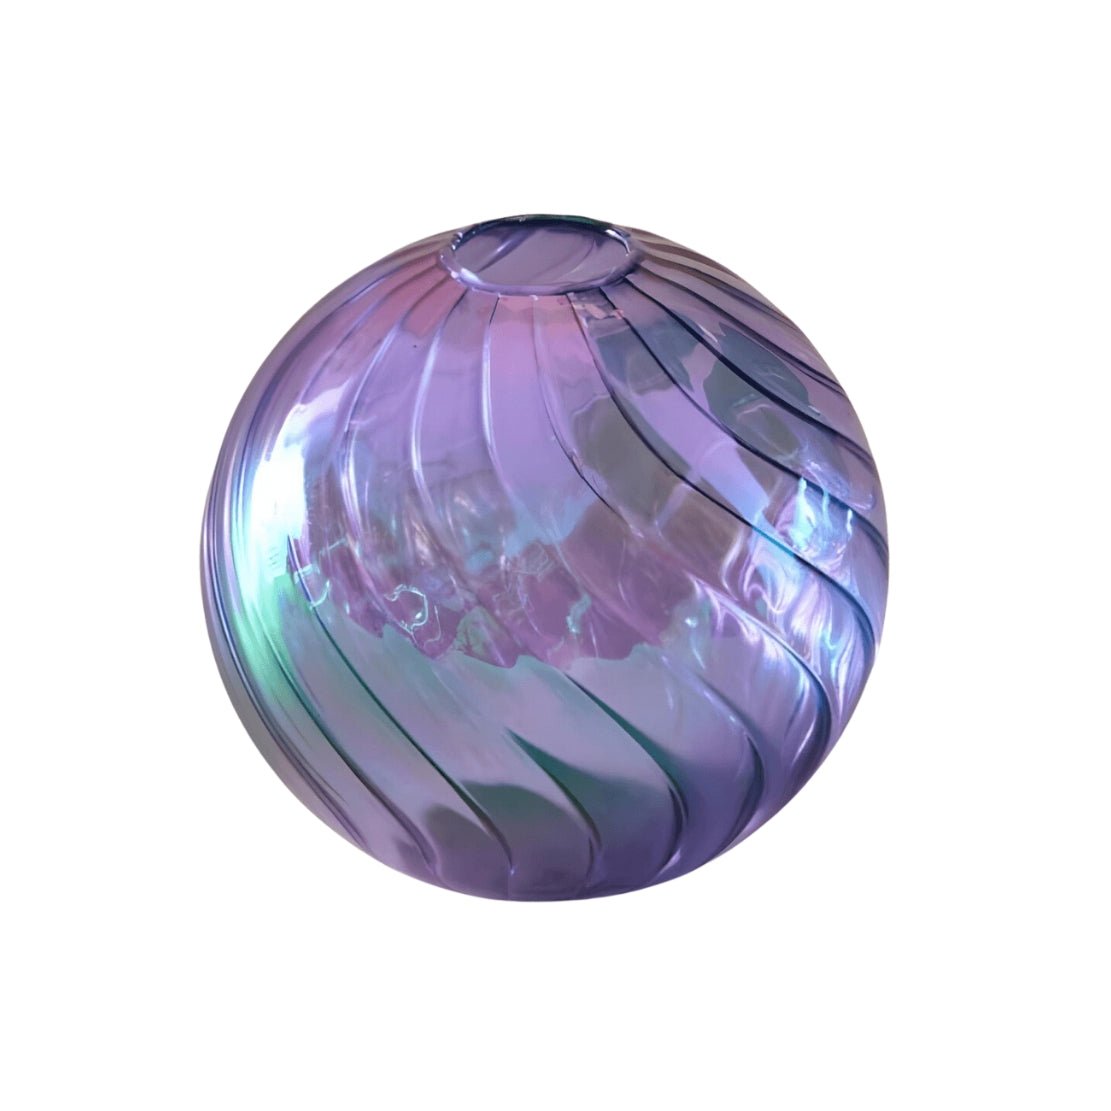 Purple, shiny glass ball vase